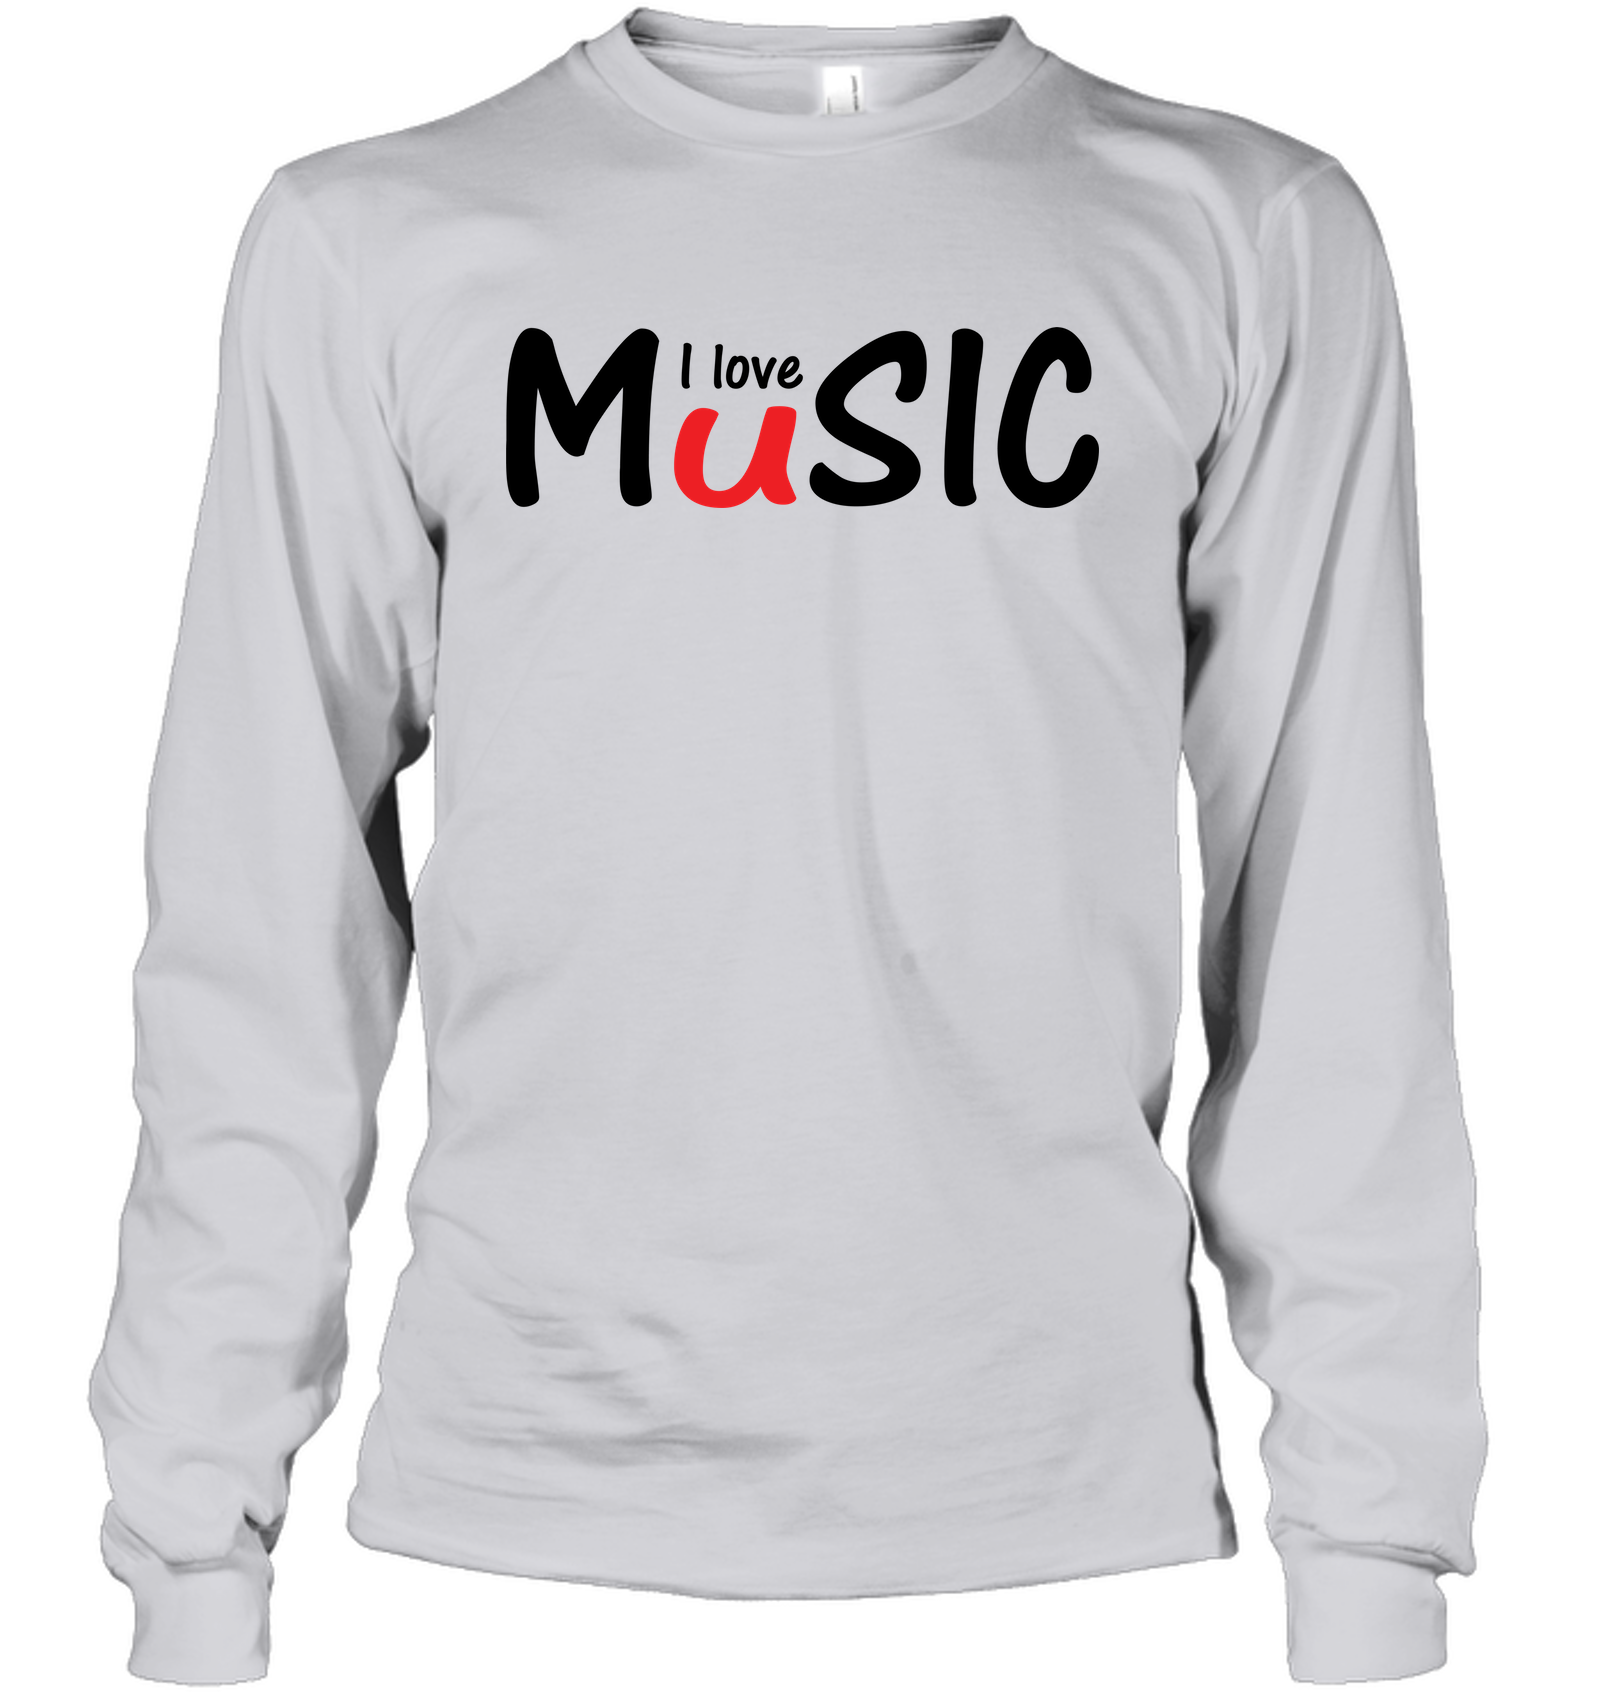 I Love Music plain and simple - Gildan Adult Classic Long Sleeve T-Shirt